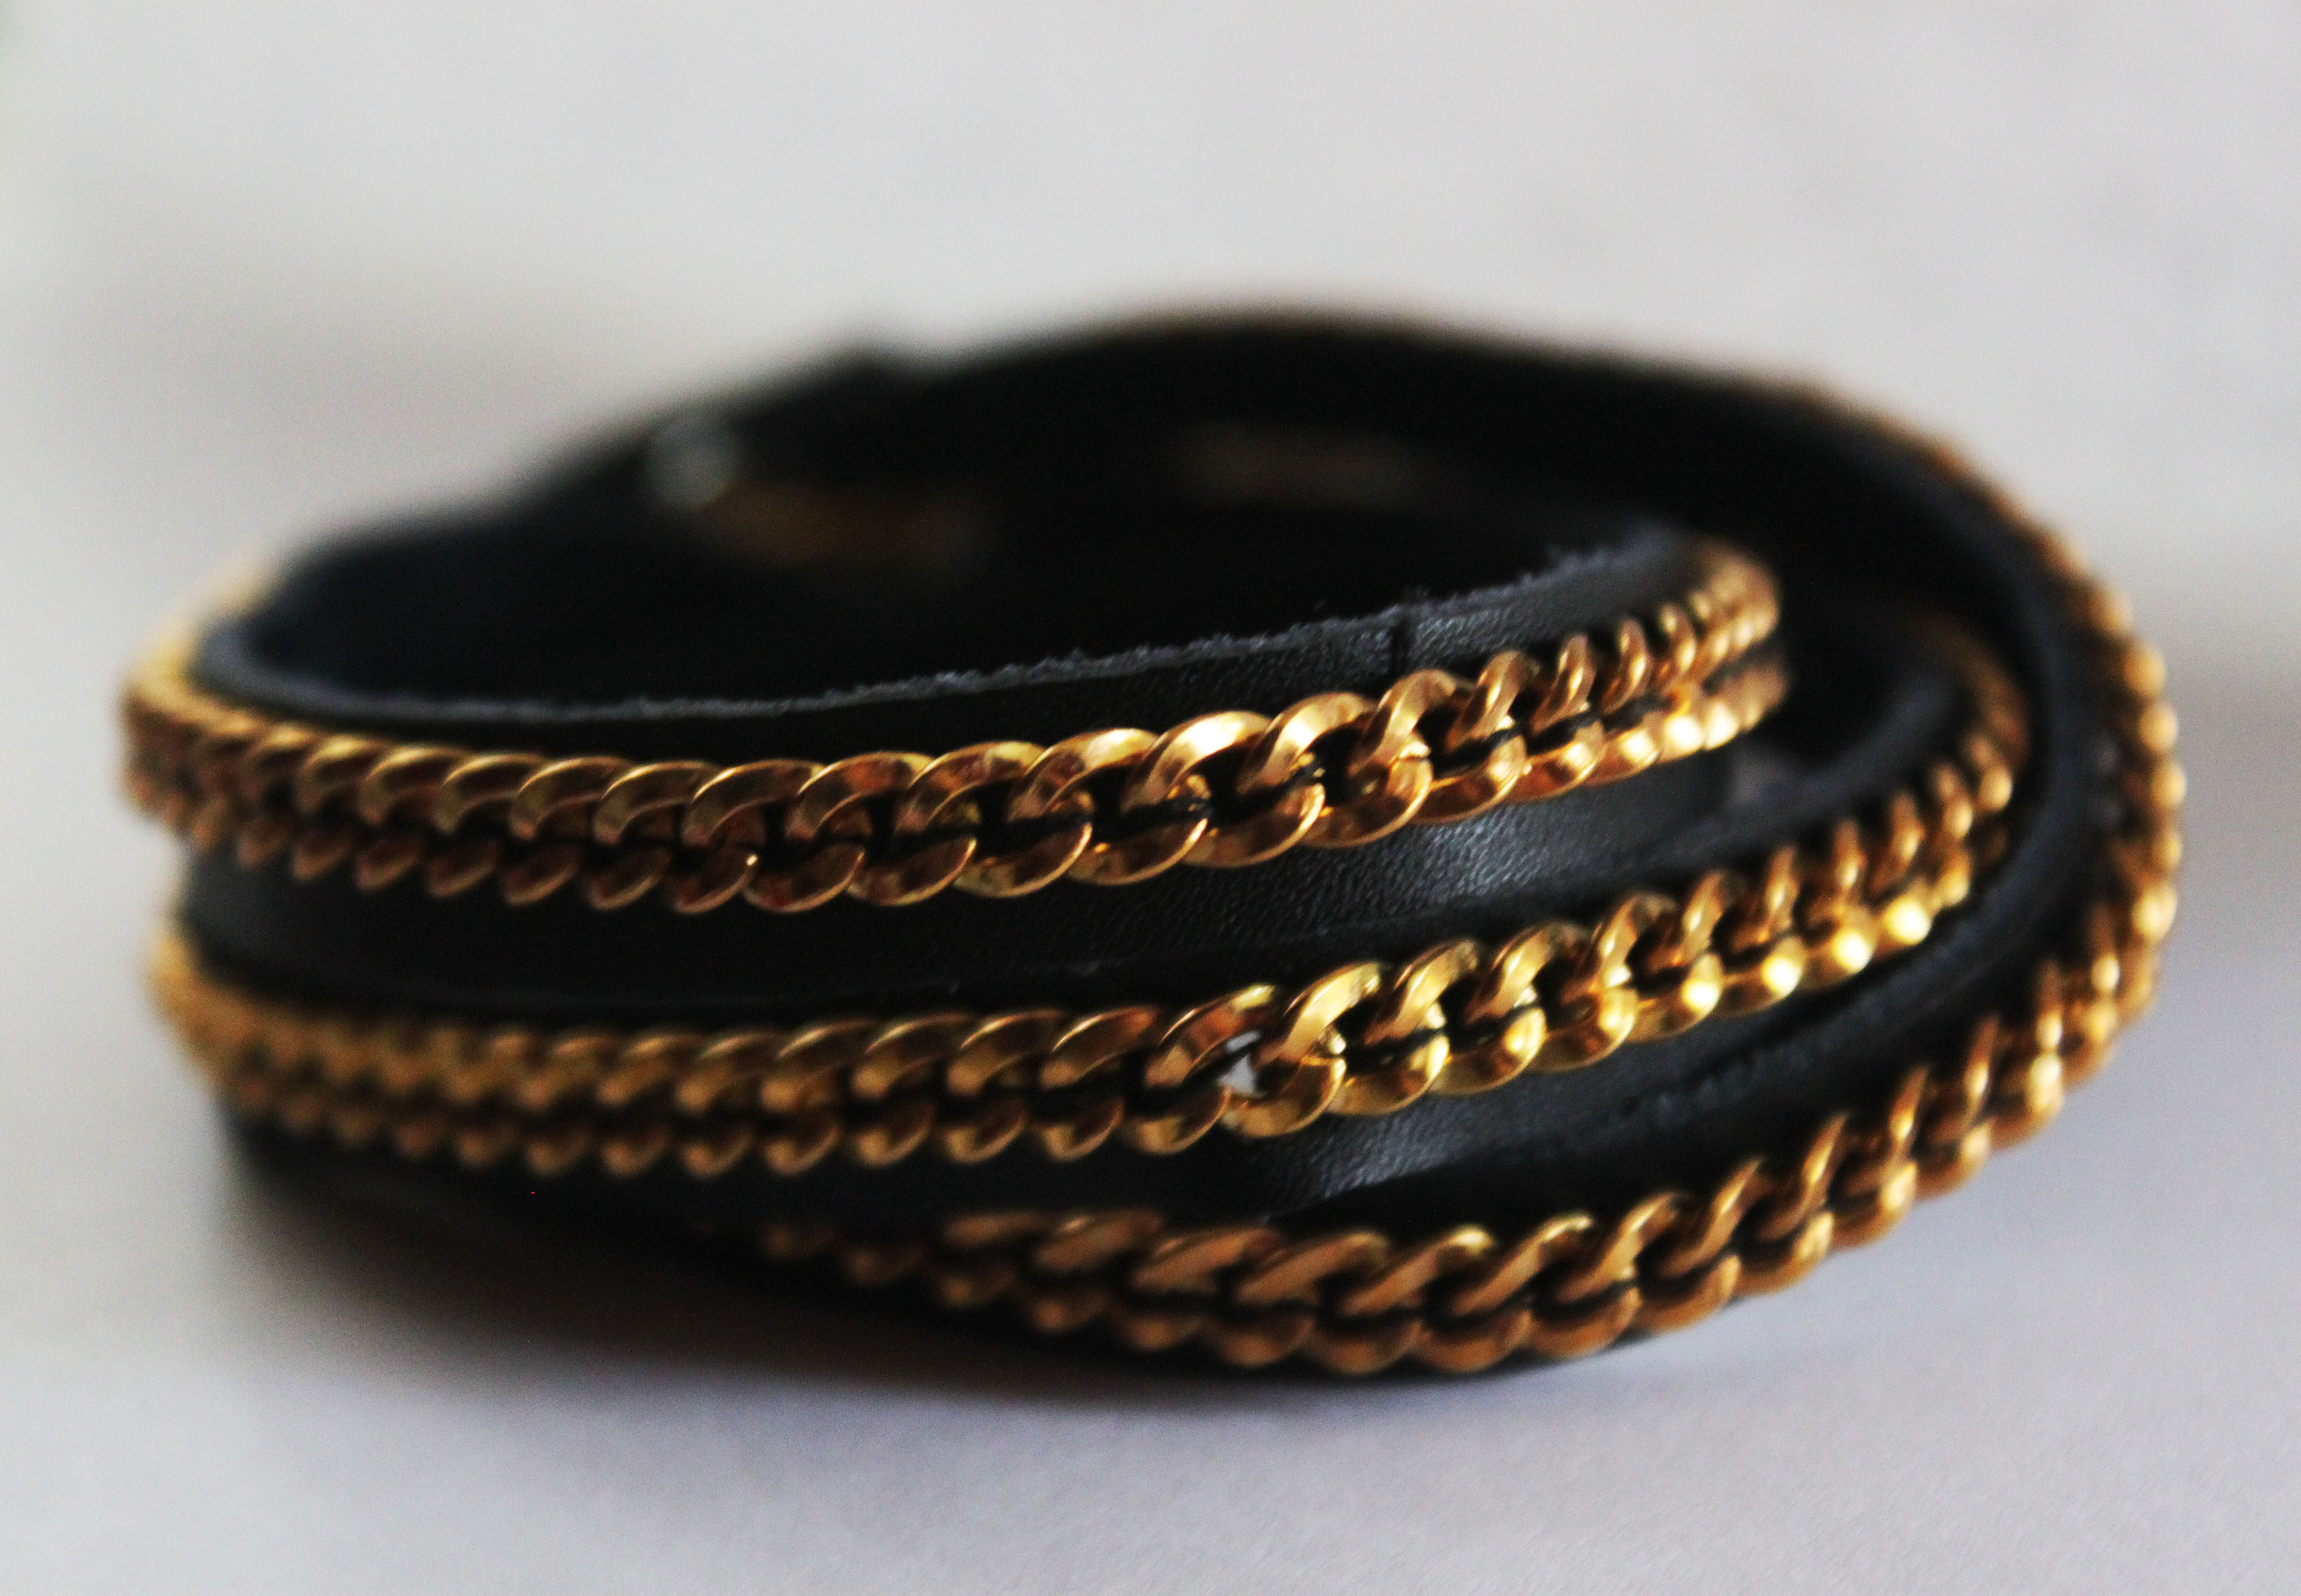 Best ideas about DIY Wrap Bracelet
. Save or Pin Hot DIY Design Ideas for Wrap Bracelet Now.